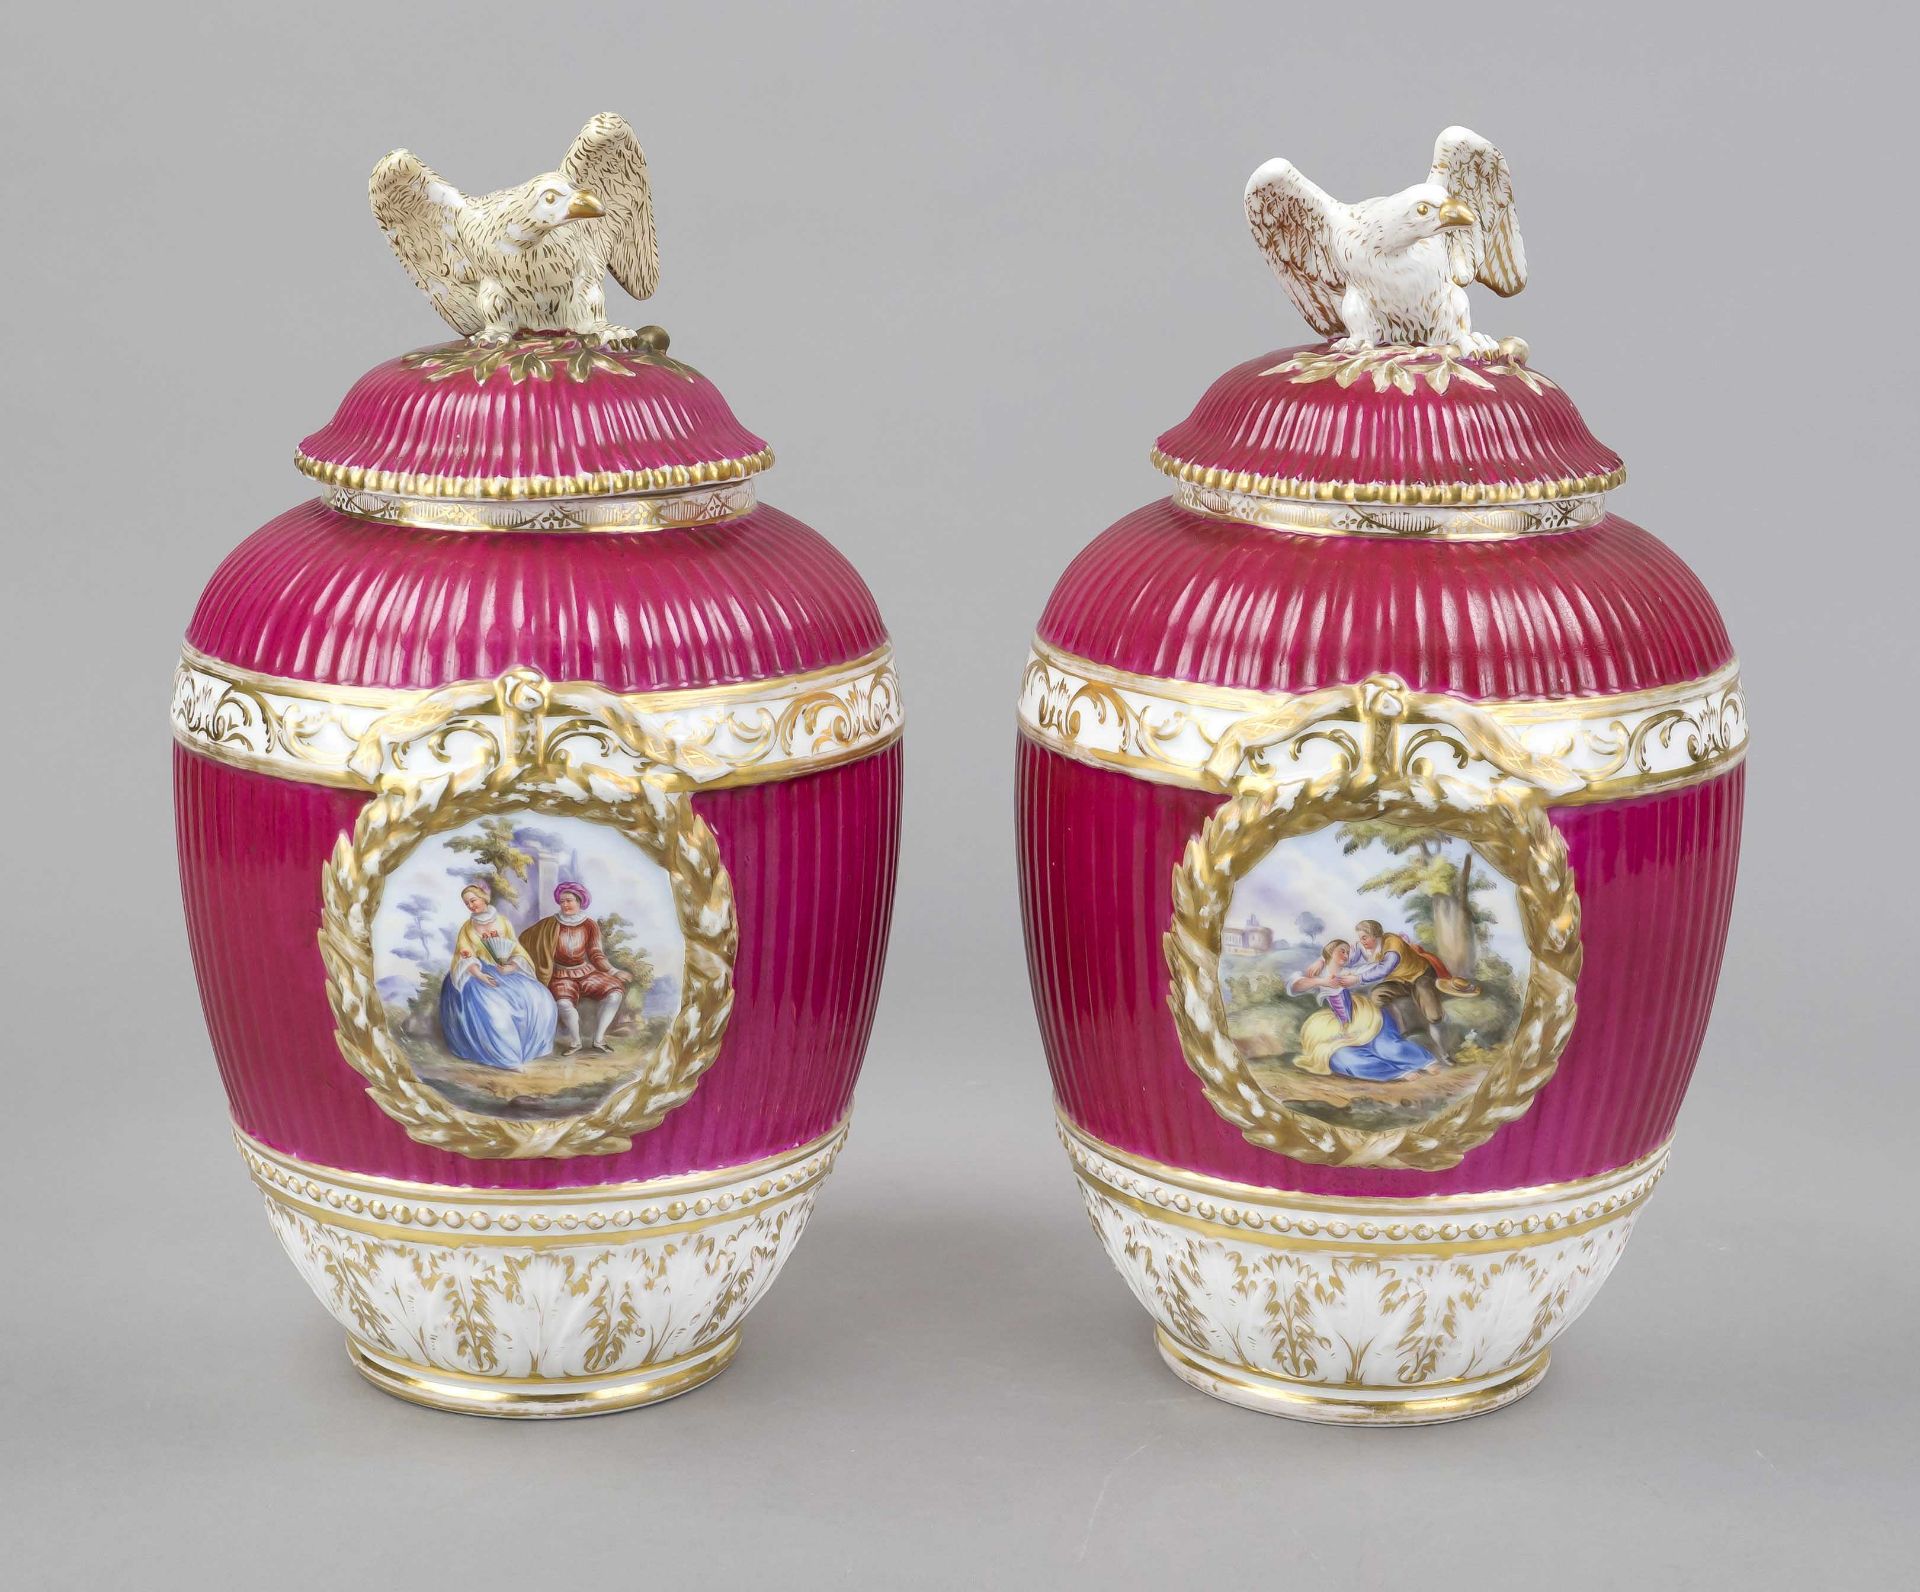 Pair of lidded vases, KPM Berlin, marks 1830s, 1st choice, designed by Friedrich Elias Meyer (1723 -